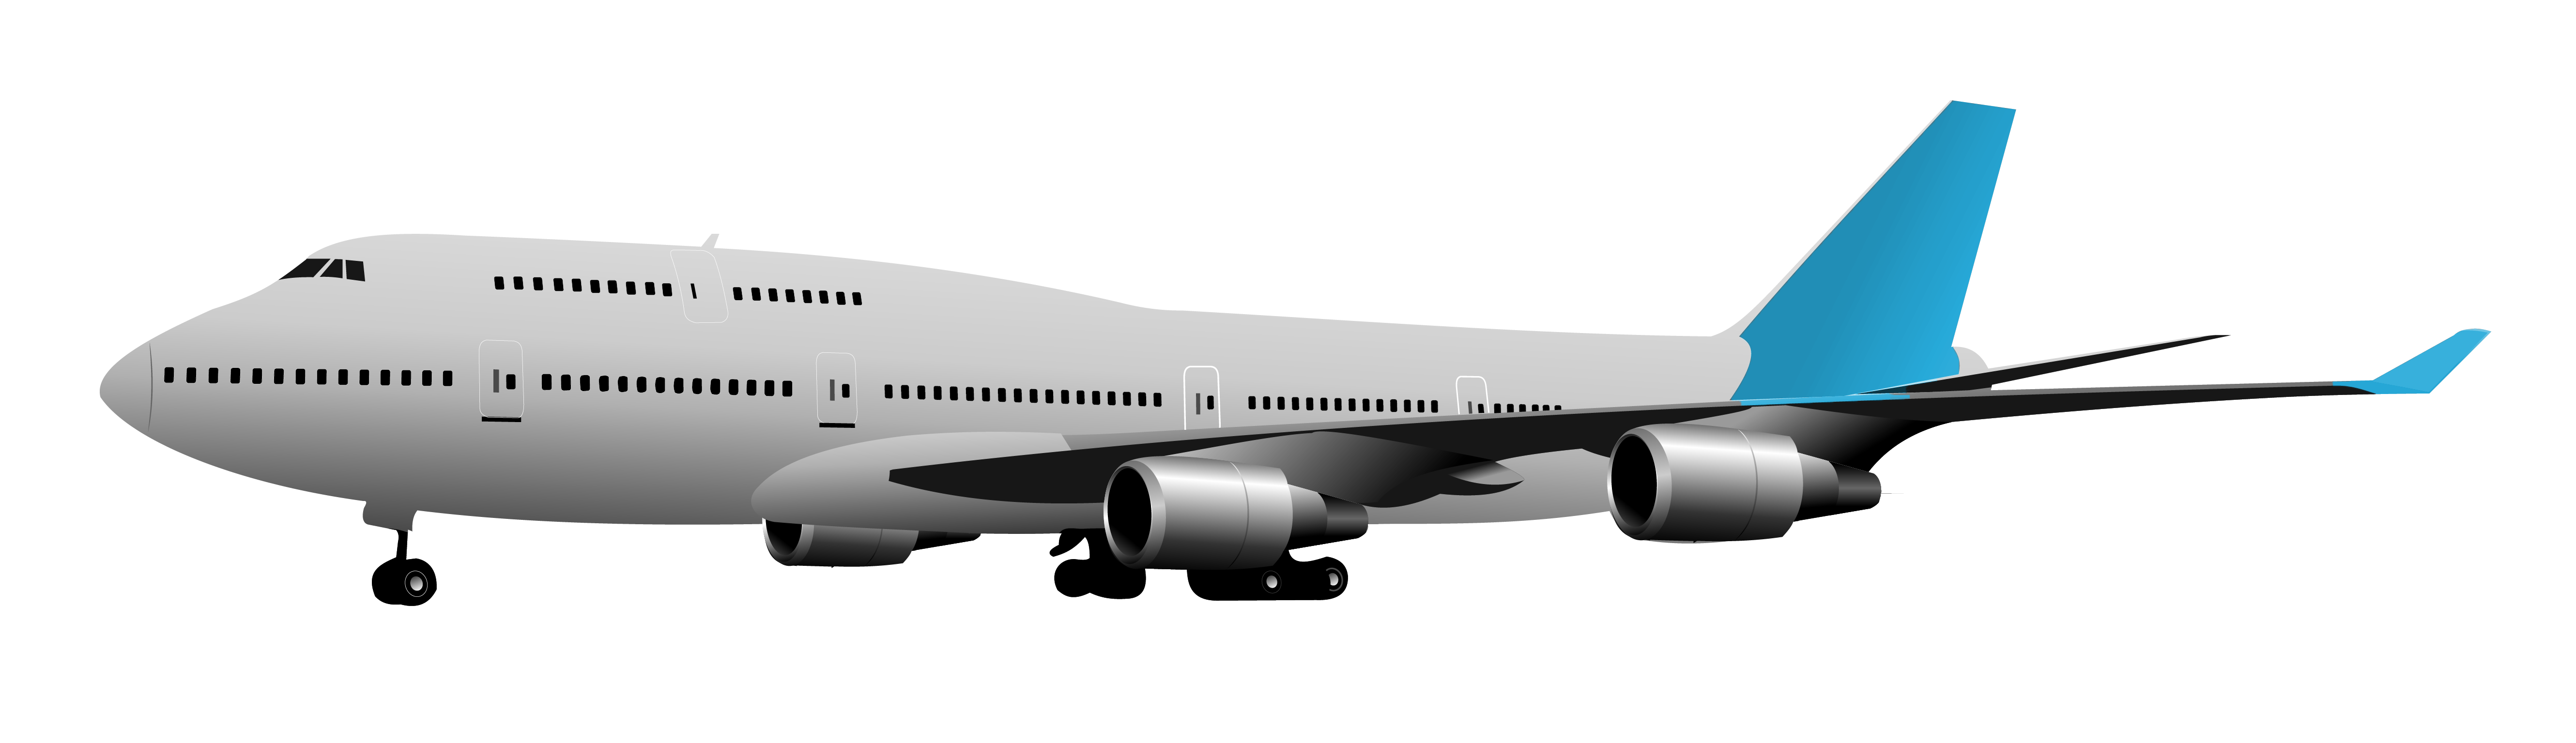 Boeing 747 Transparent File